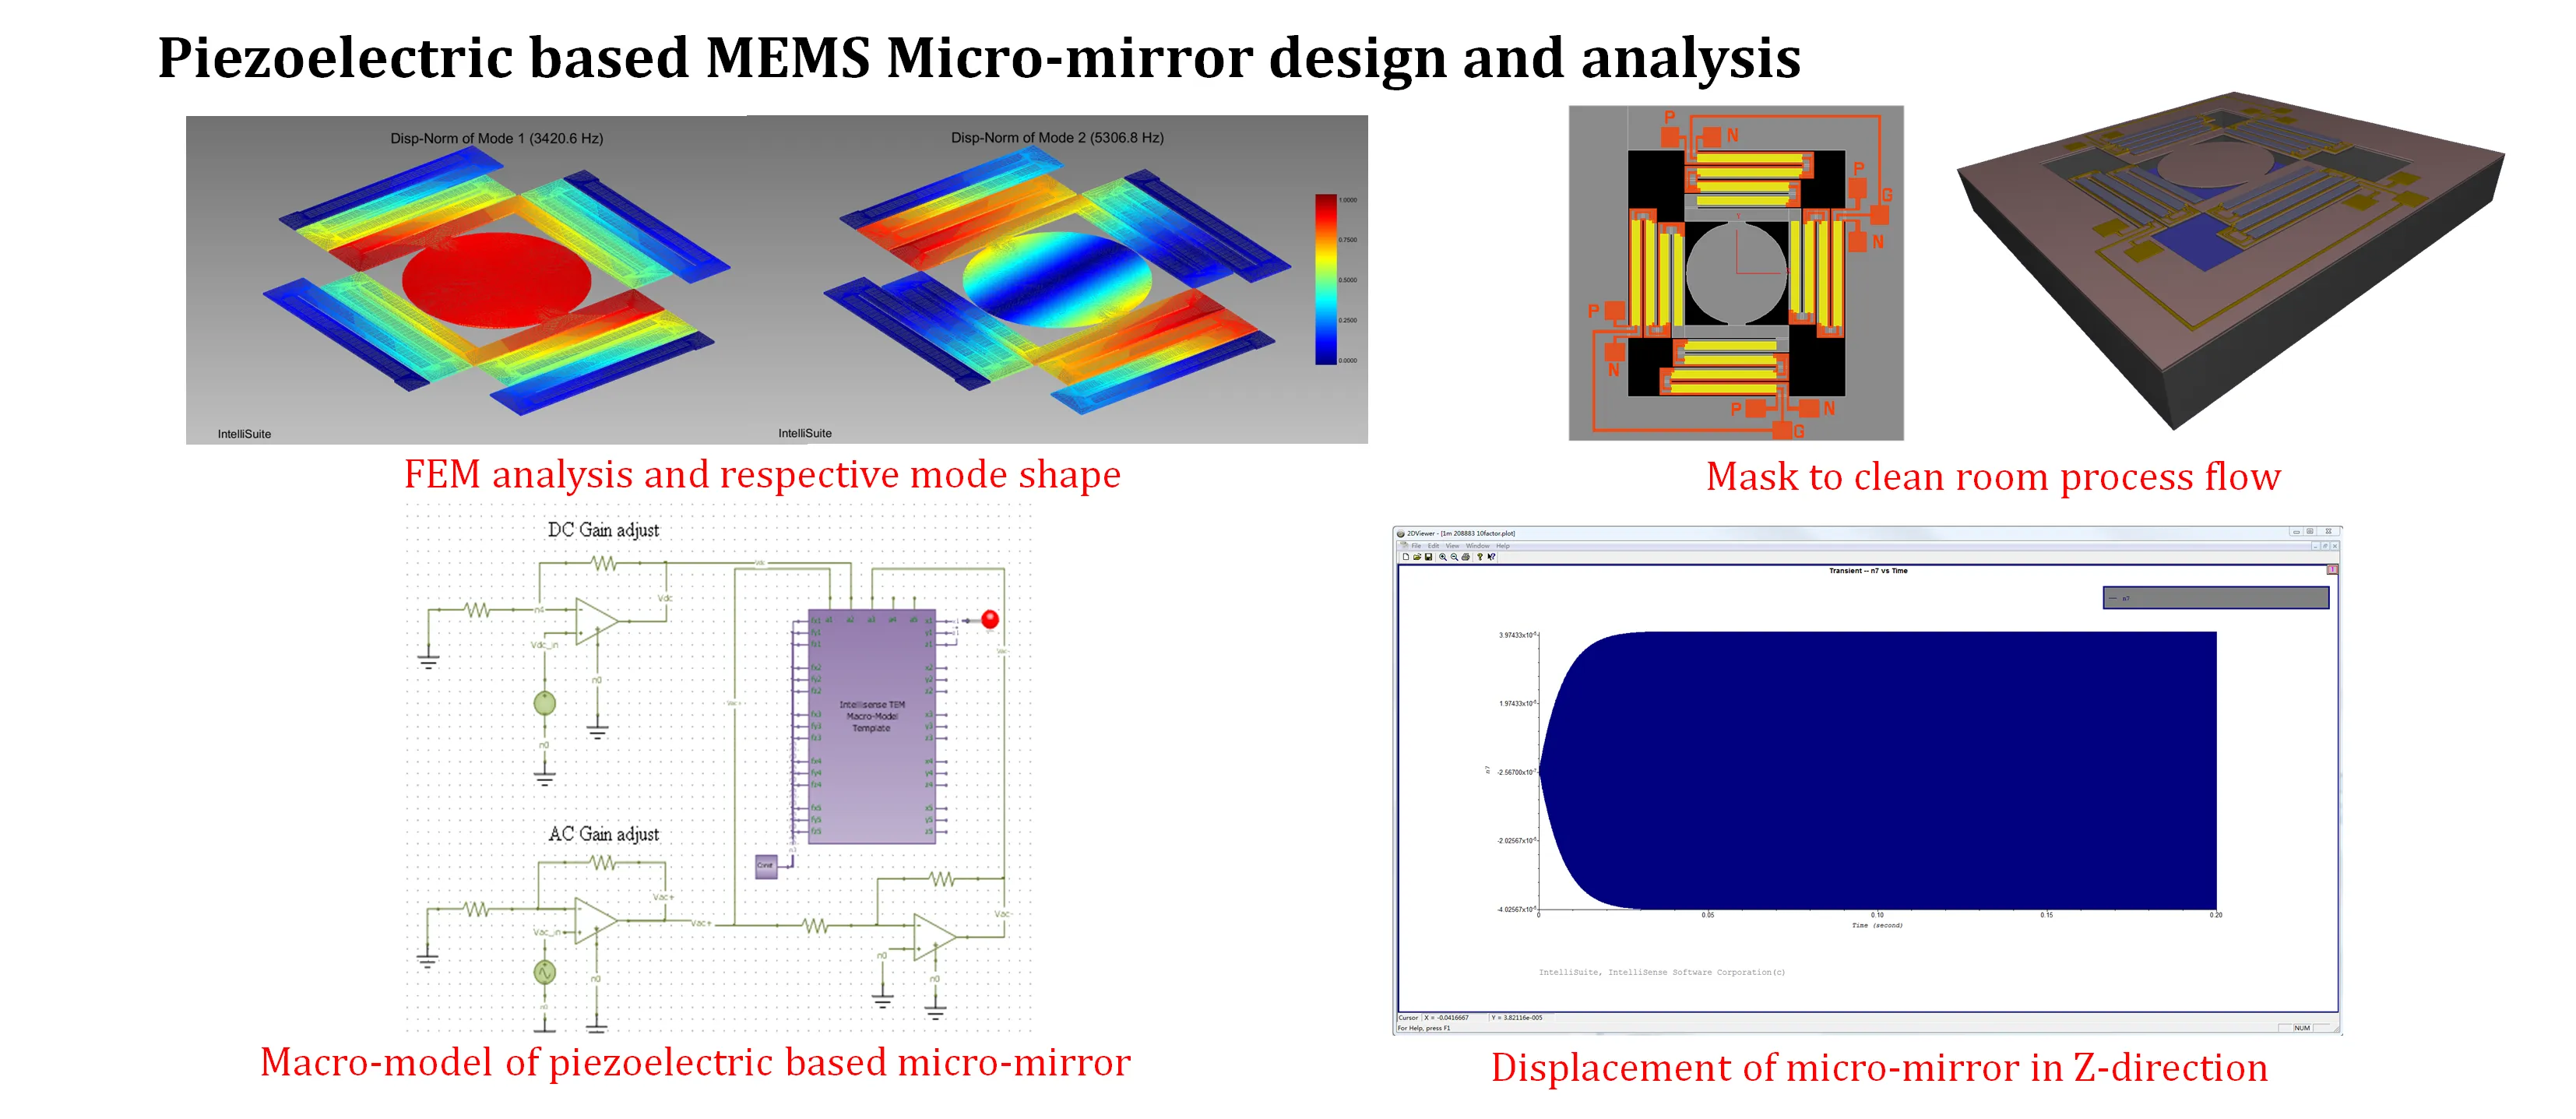 Piezoelectric based MEMS Micro-mirror design and analysis